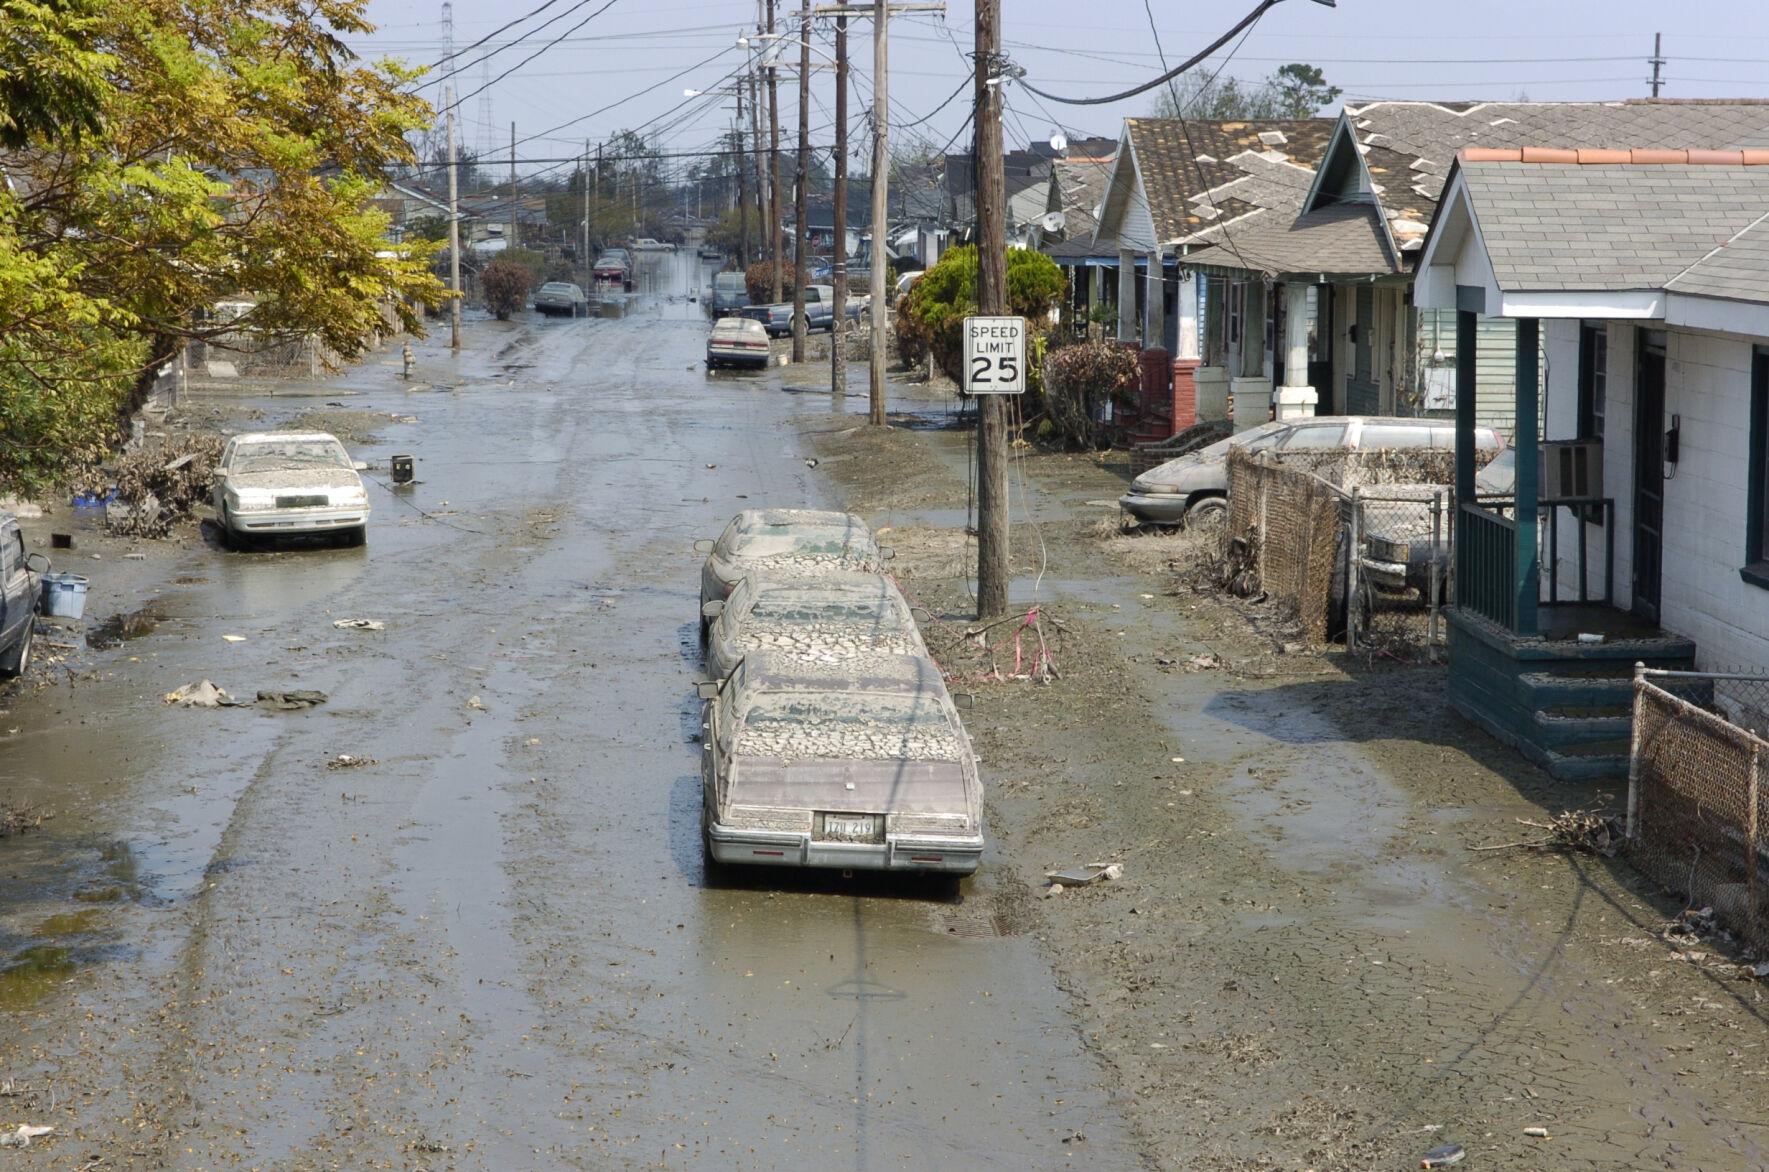 New Orleans' Lower 9th Ward is still reeling from Hurricane Katrina's